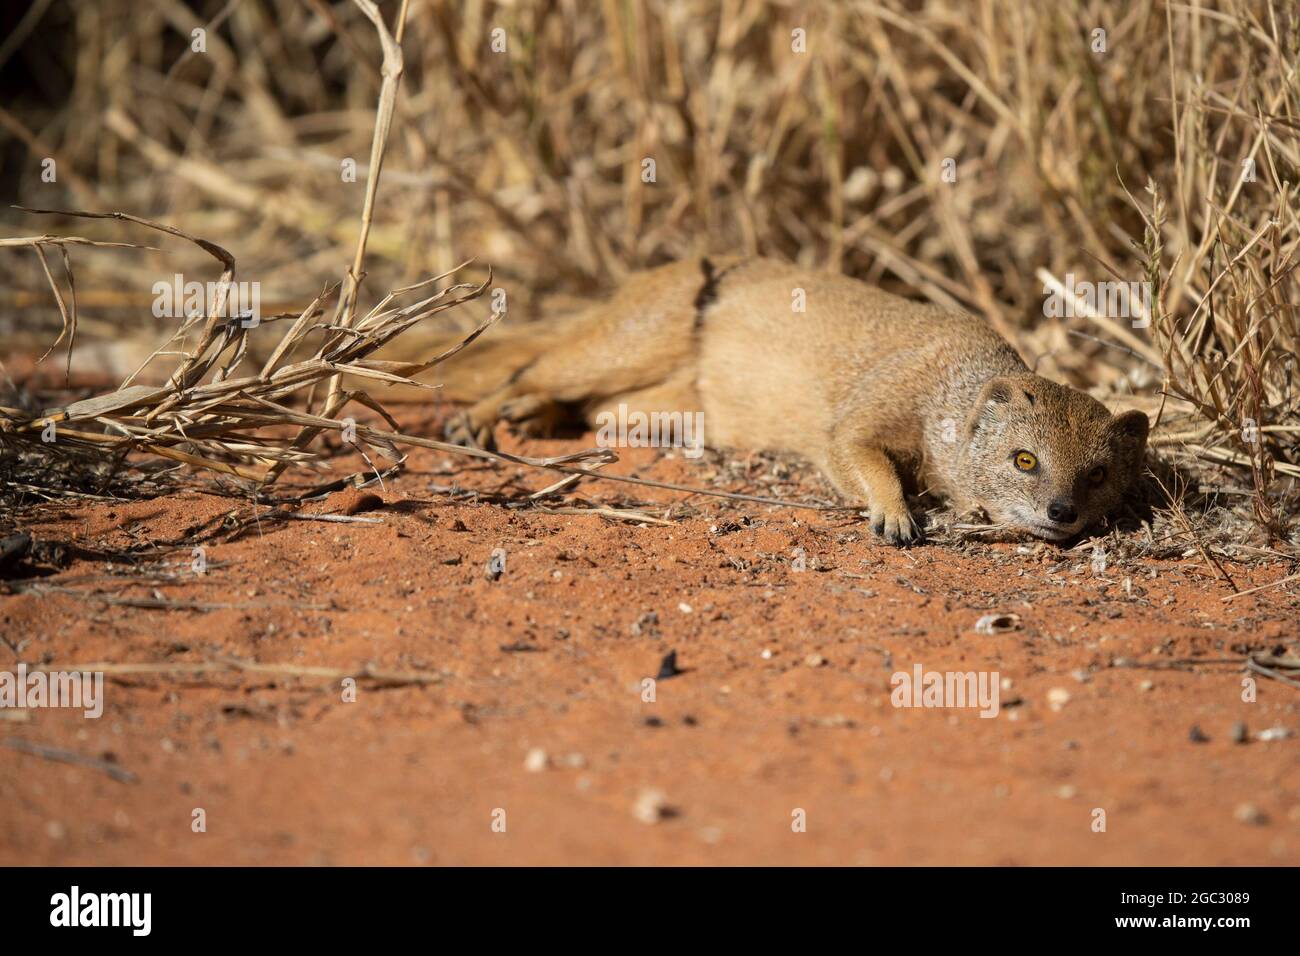 Yellow mongoose, Cynictis penicillata, Kgalagadi Transfrontier Park, South Africa Stock Photo